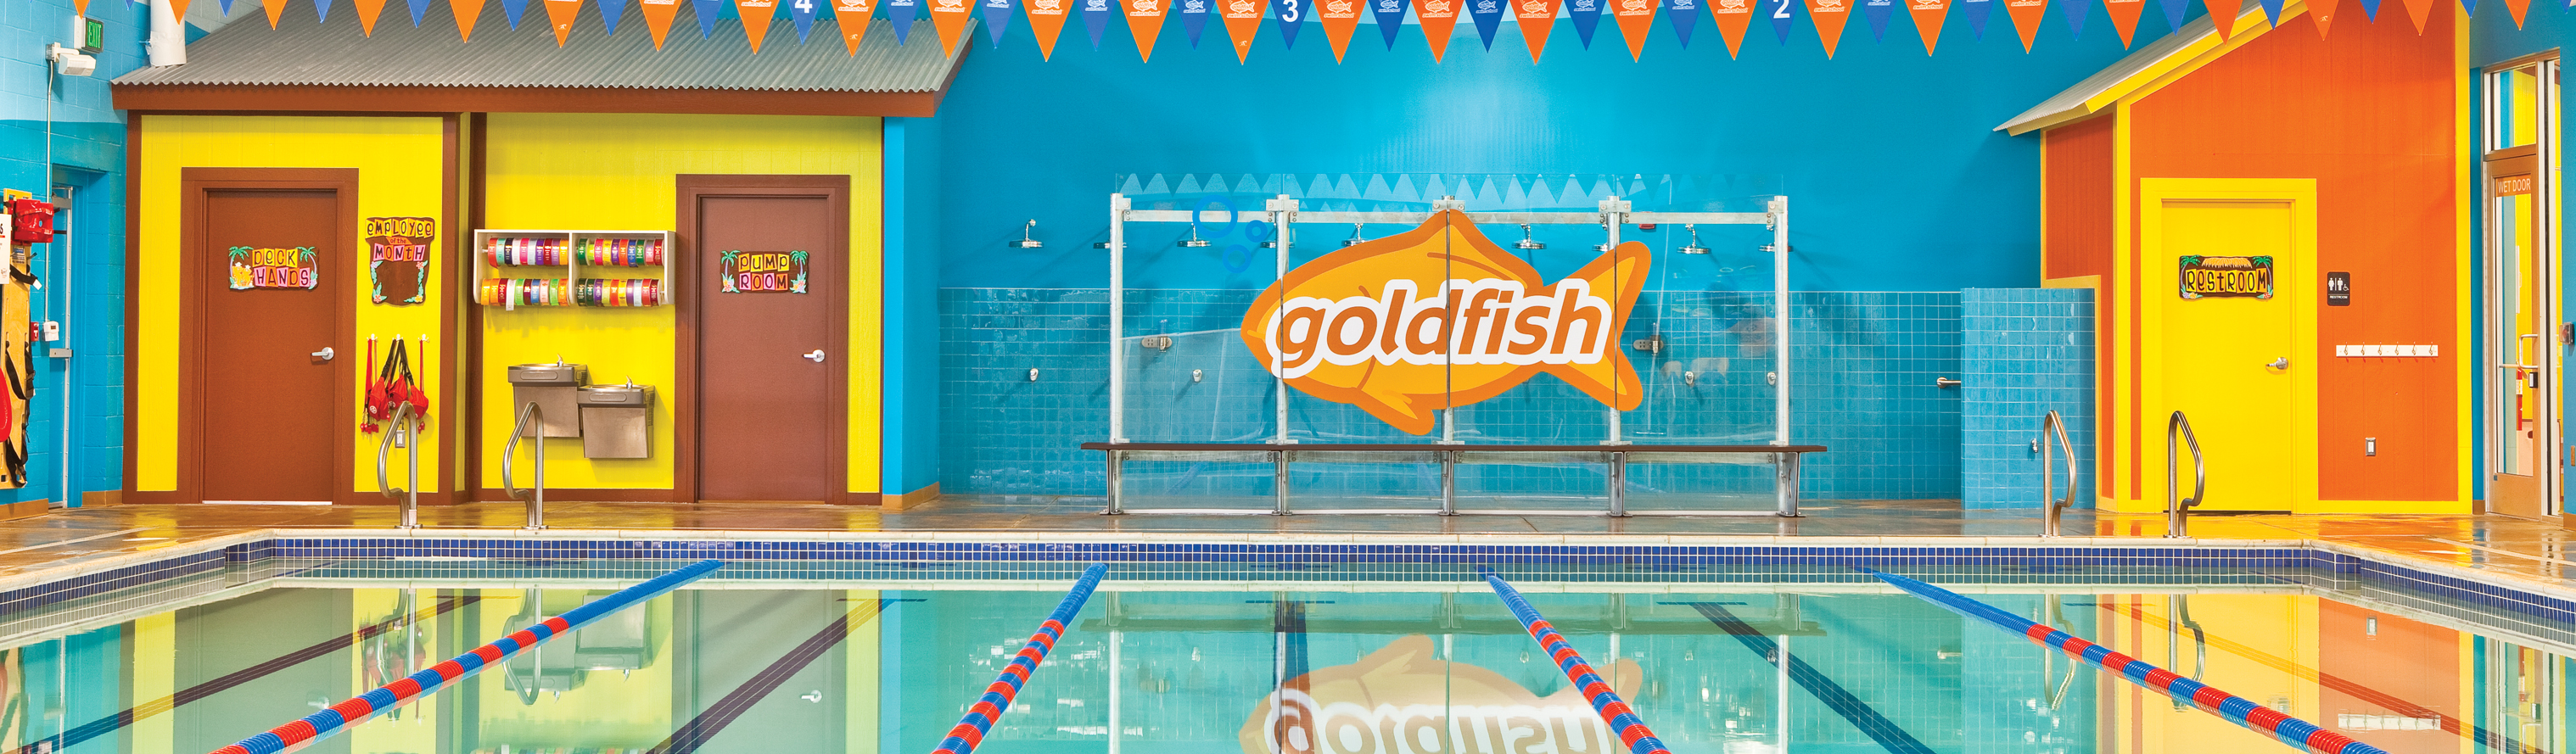 Michigan holiday giveaway: Goldfish Swim School Gift © www.roastedbeanz.com #GoldfishSwimSchool #rbz [AD]